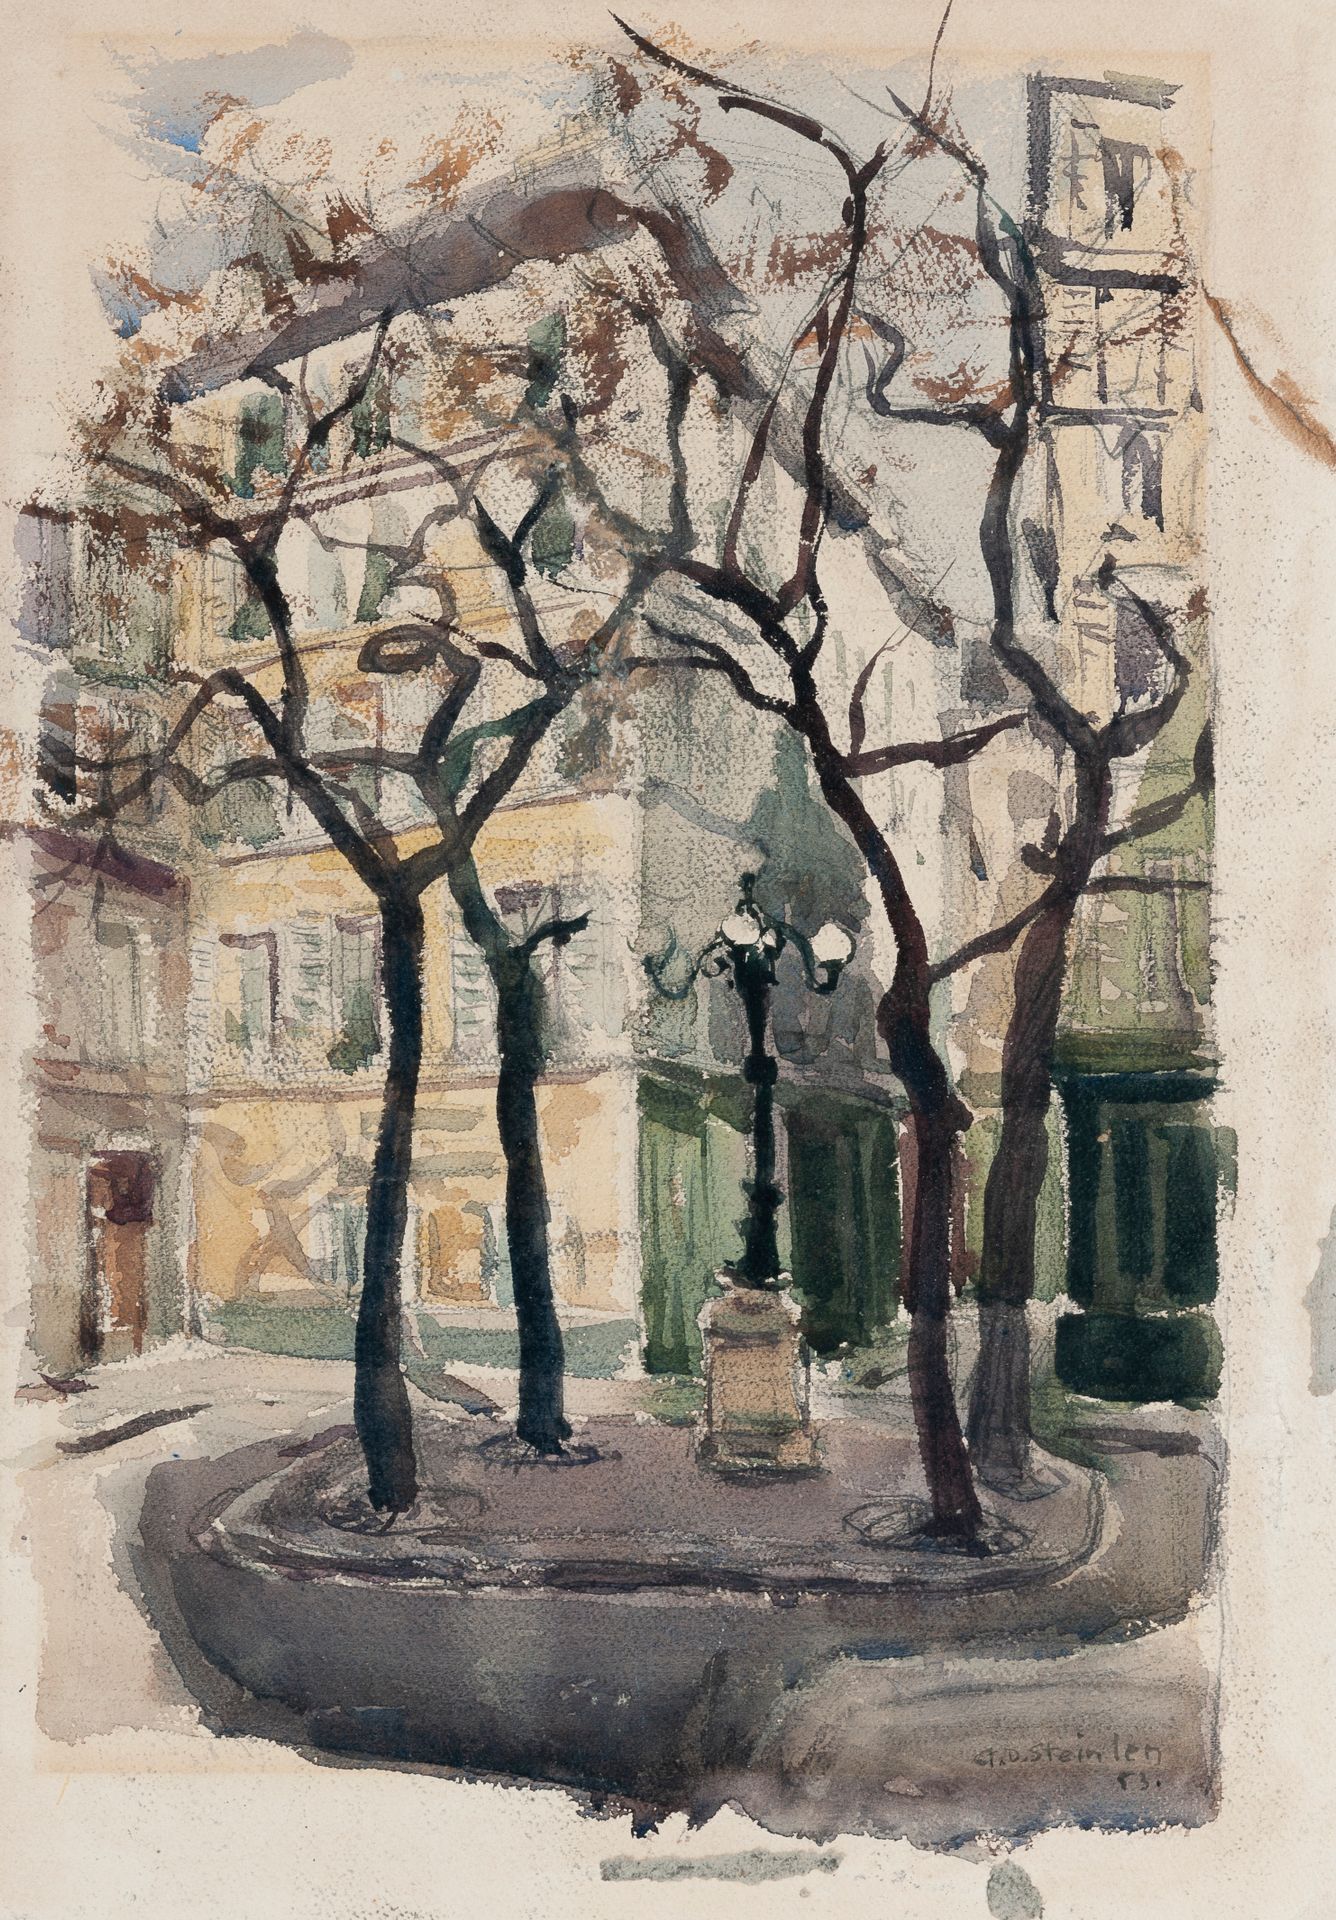 Null 艾梅-丹尼尔-斯坦伦（1923-1996）。1923年秋，弗斯滕伯格广场。纸上水彩和水粉画。右下方有签名和日期。44 x 31 cm